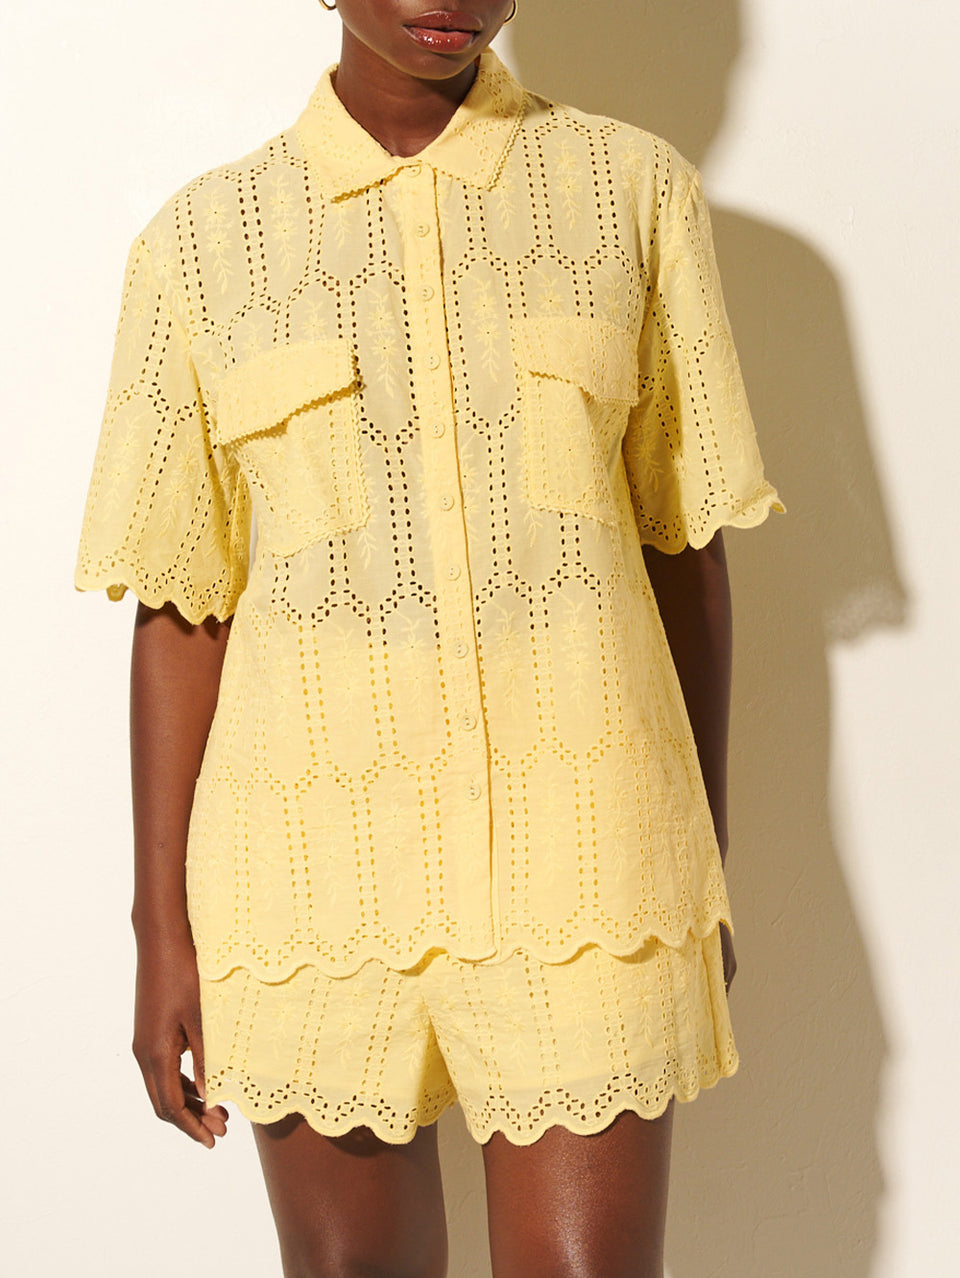 Estelle Shirt KIVARI | Model wears yellow shirt close up